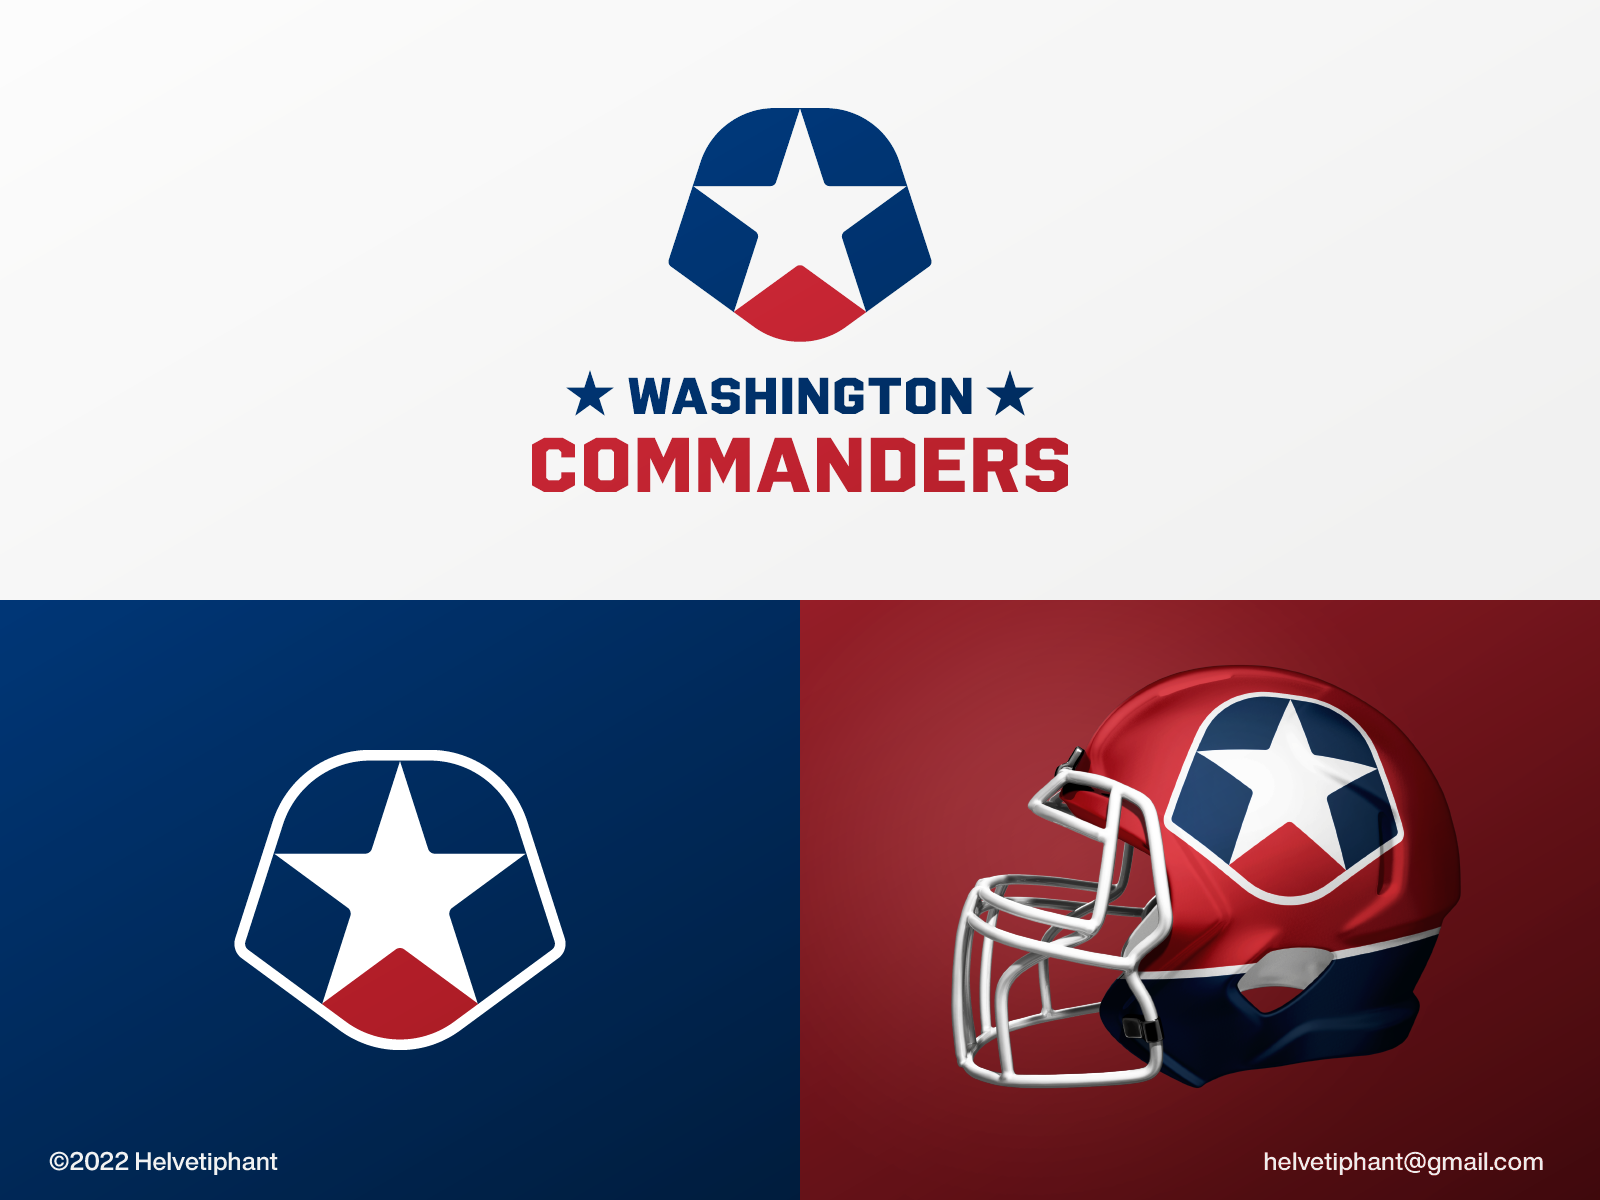 Washington Commanders - Logo Proposal by Helvetiphant™ on Dribbble